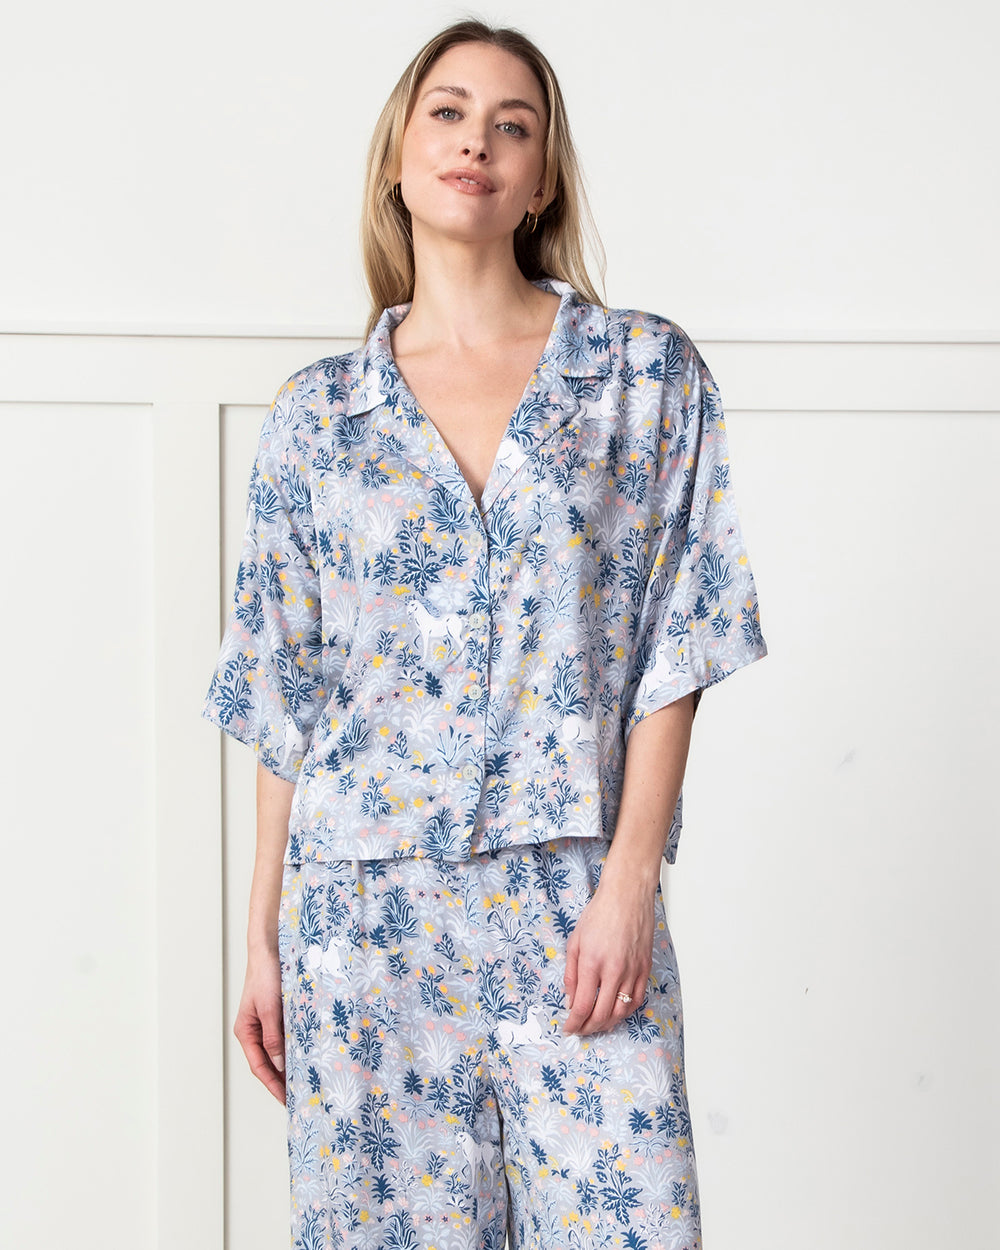 SAPJON Women's 4pcs Silk Satin Pajama Set Cami Top Nightgown Lace Sleepwear  Robe